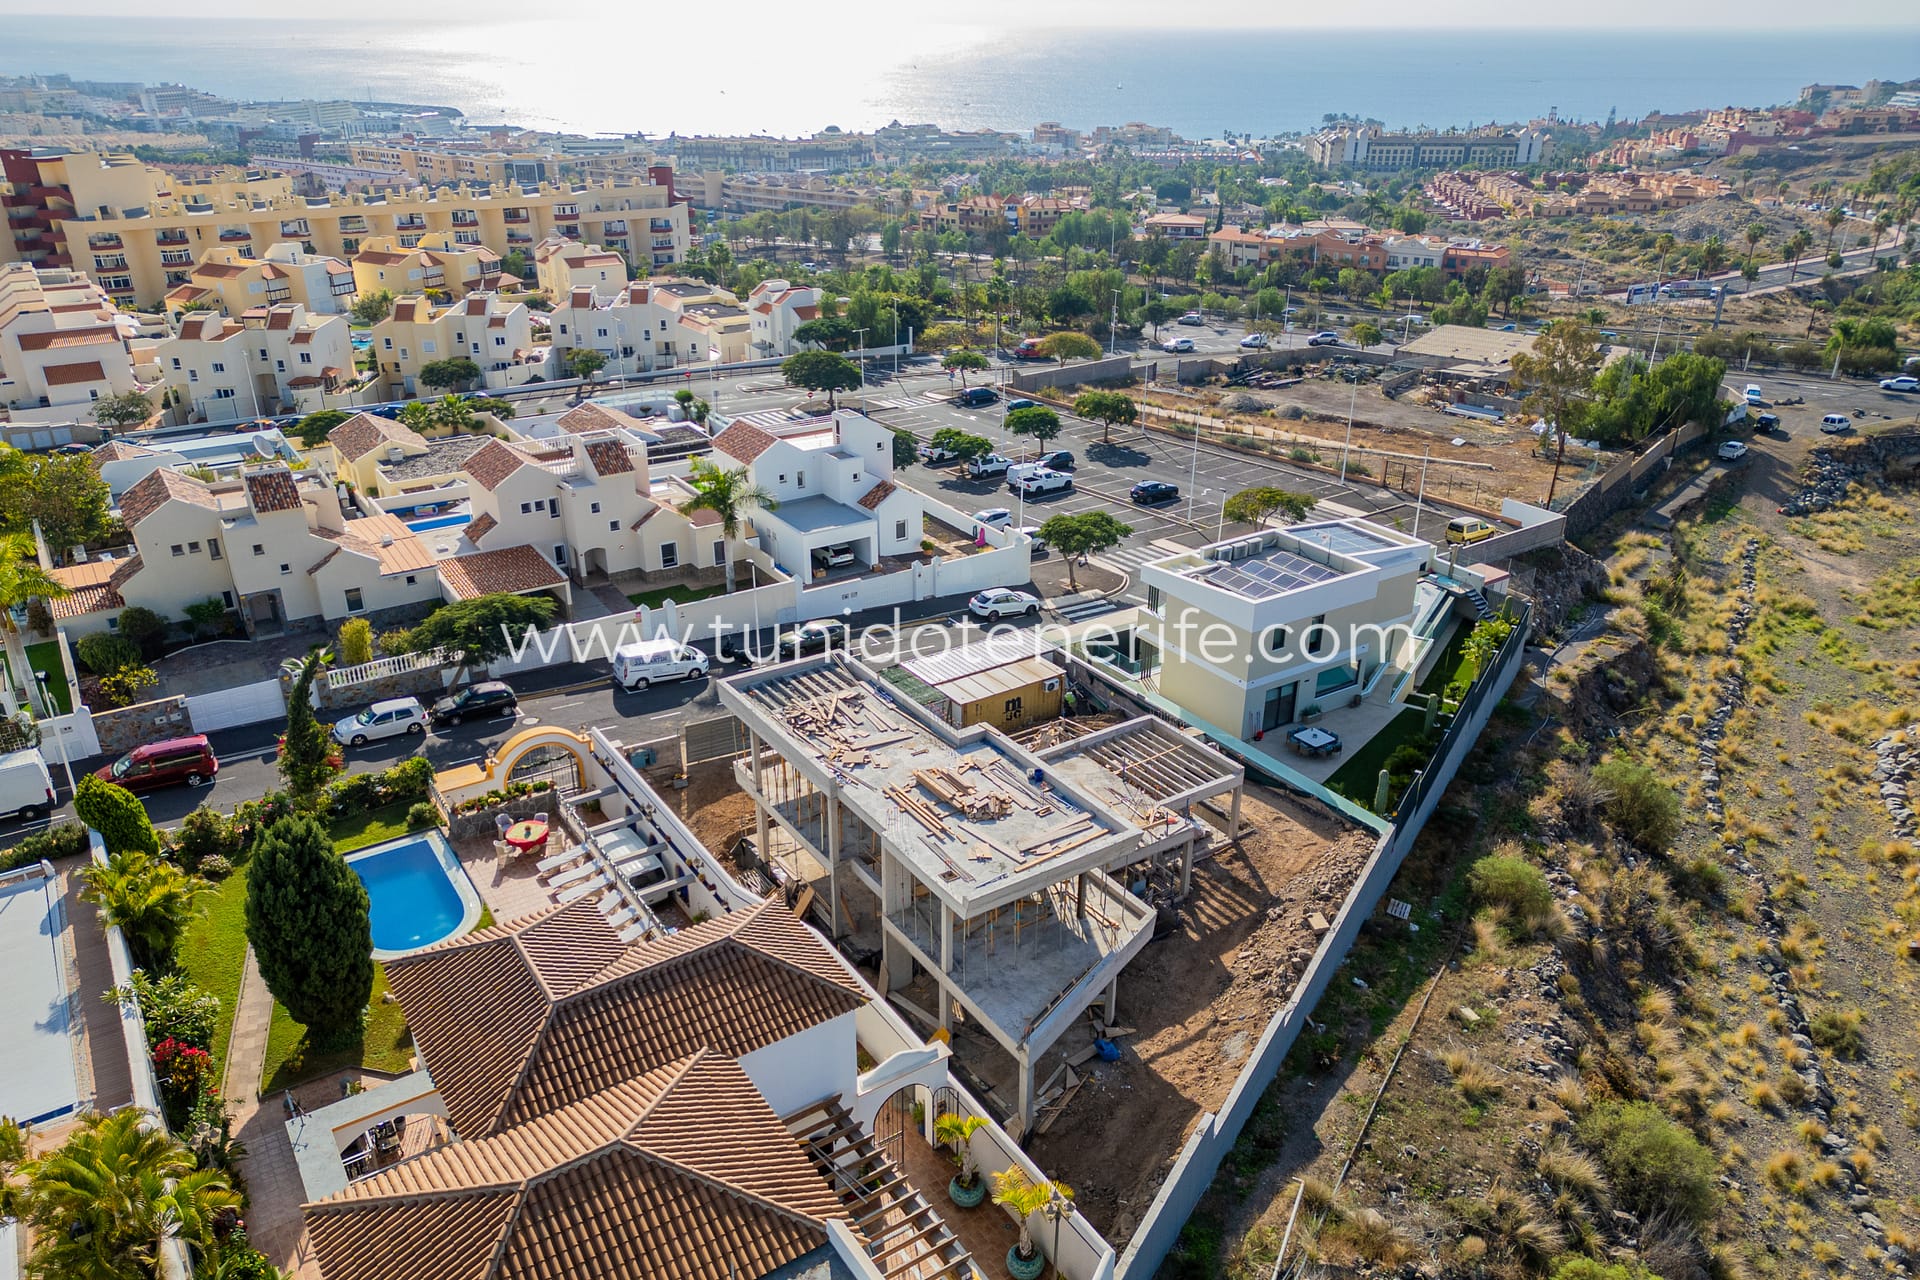 Villa for sale in Tenerife South, Madroñal de Fañabe